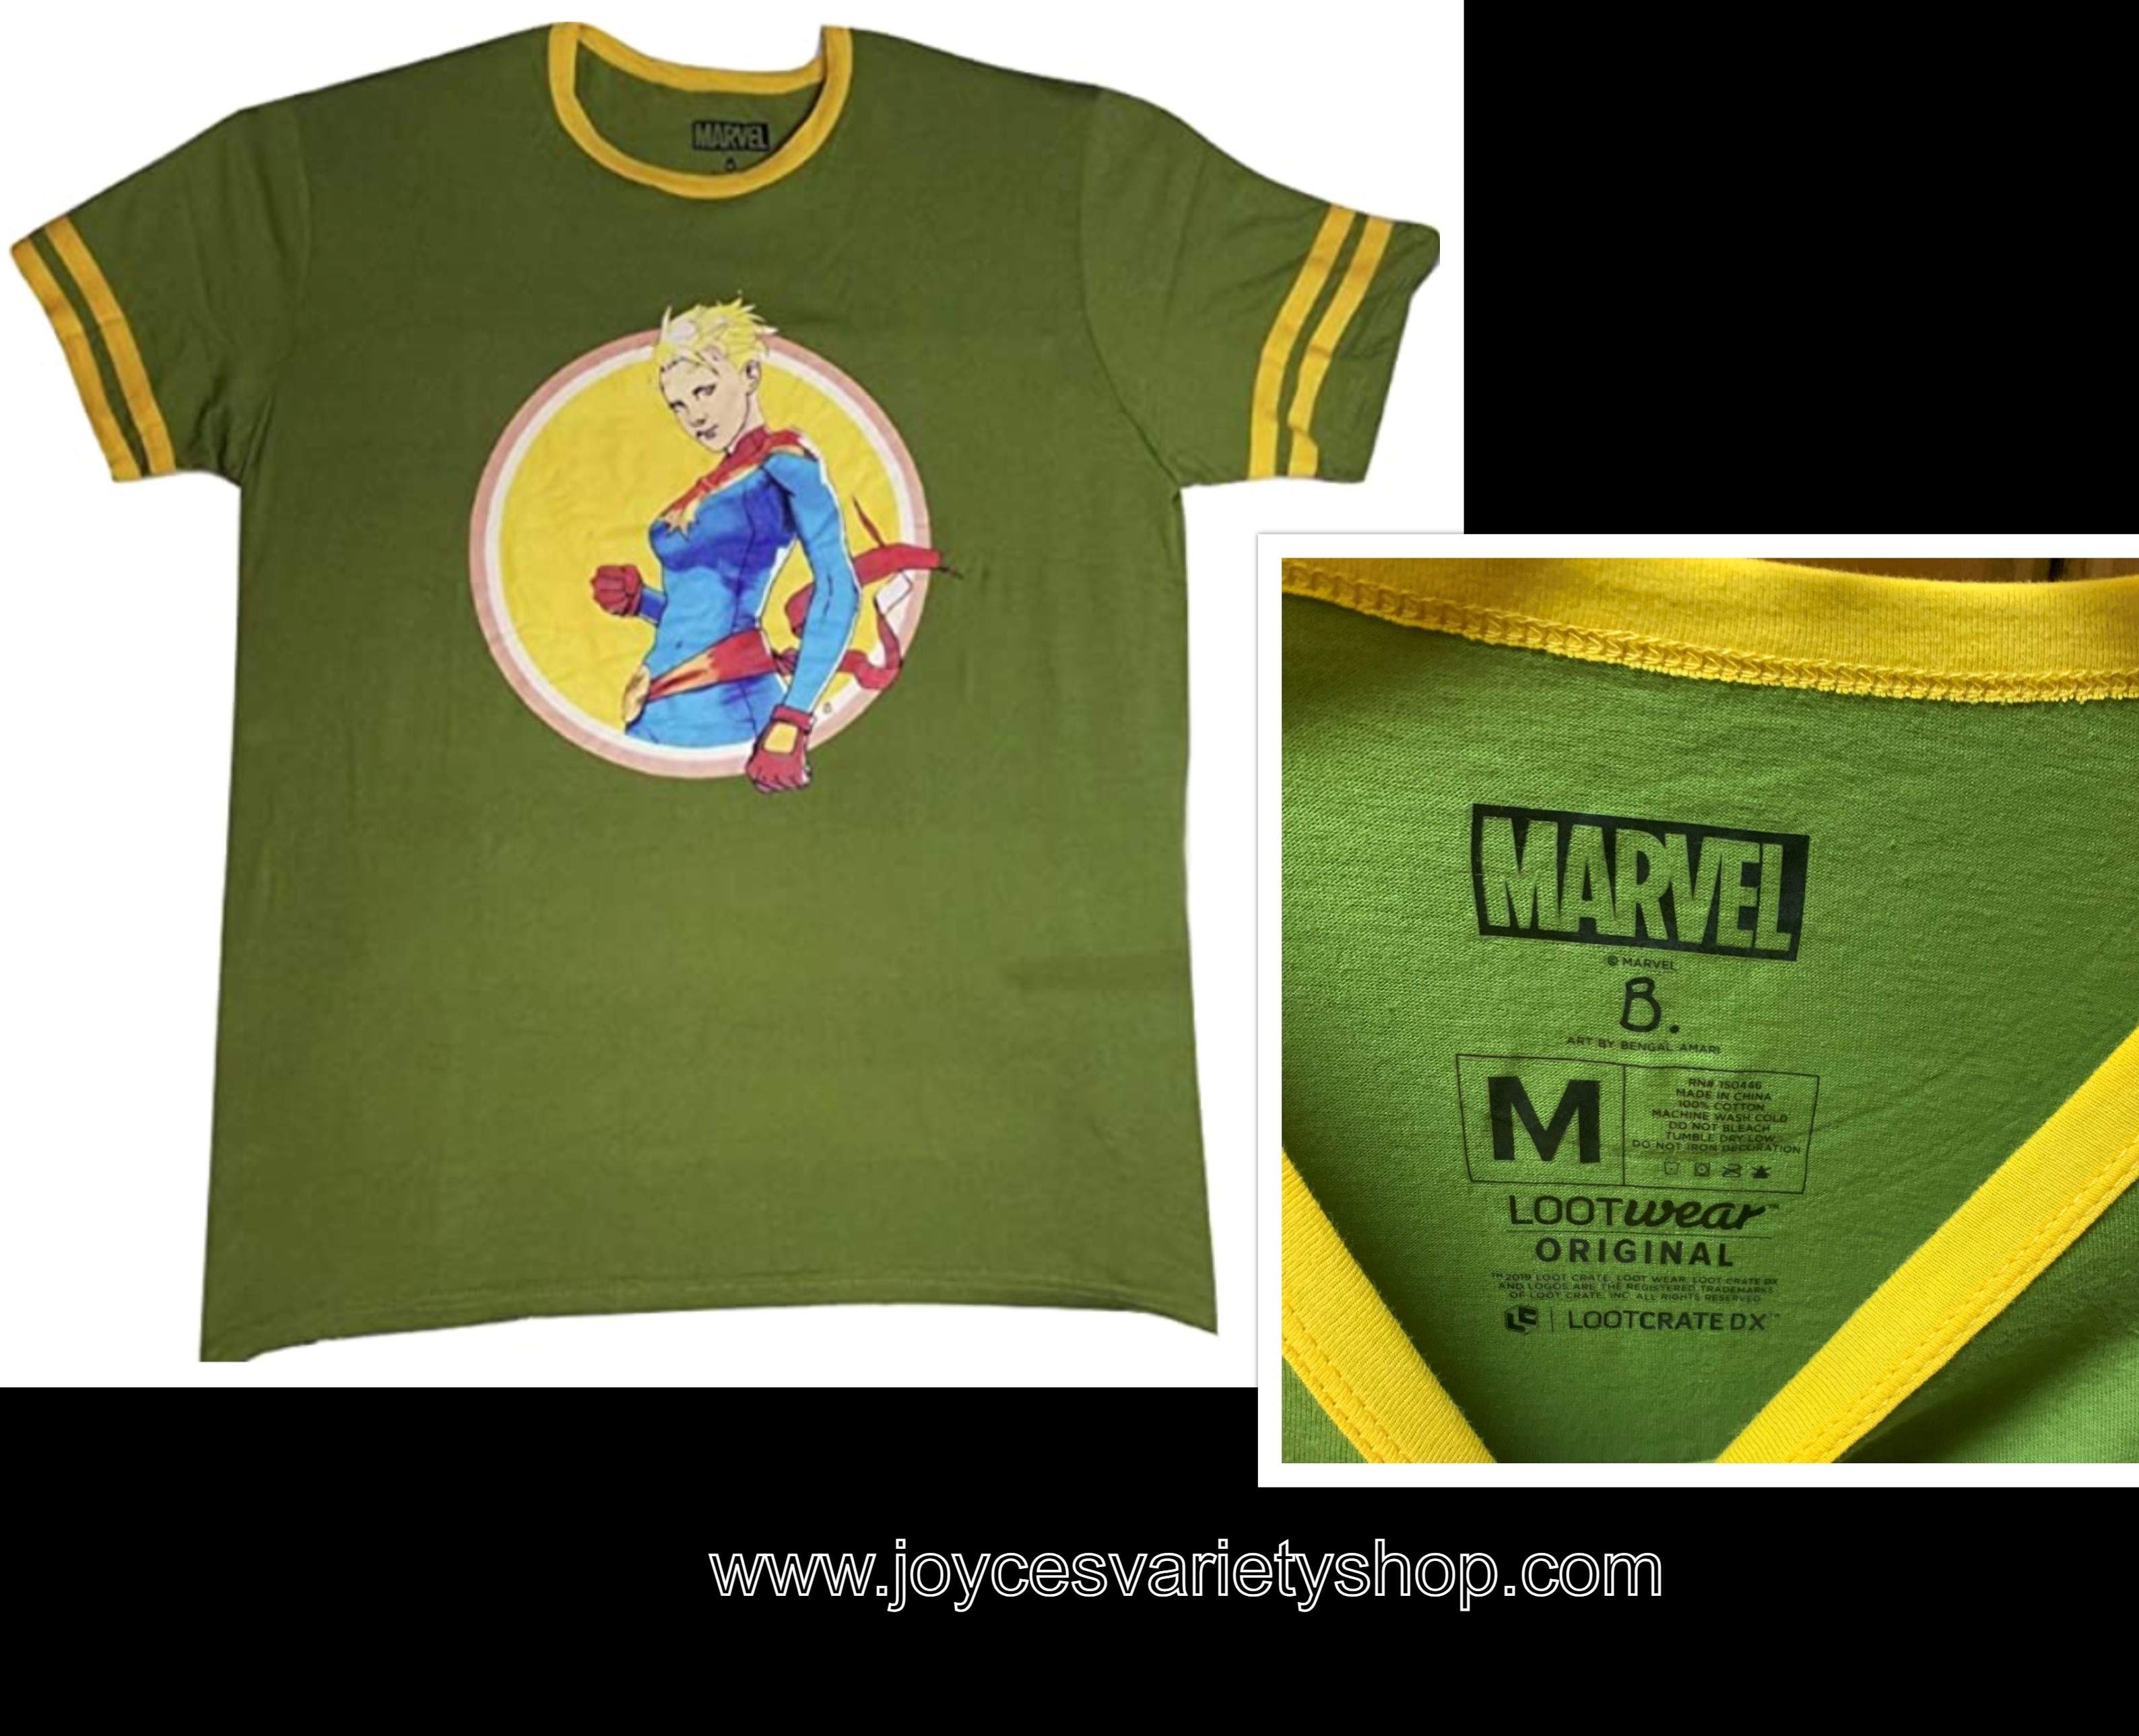 New Lootcrate Lootgear Original Captain Marvel Graphic T Shirt Size M